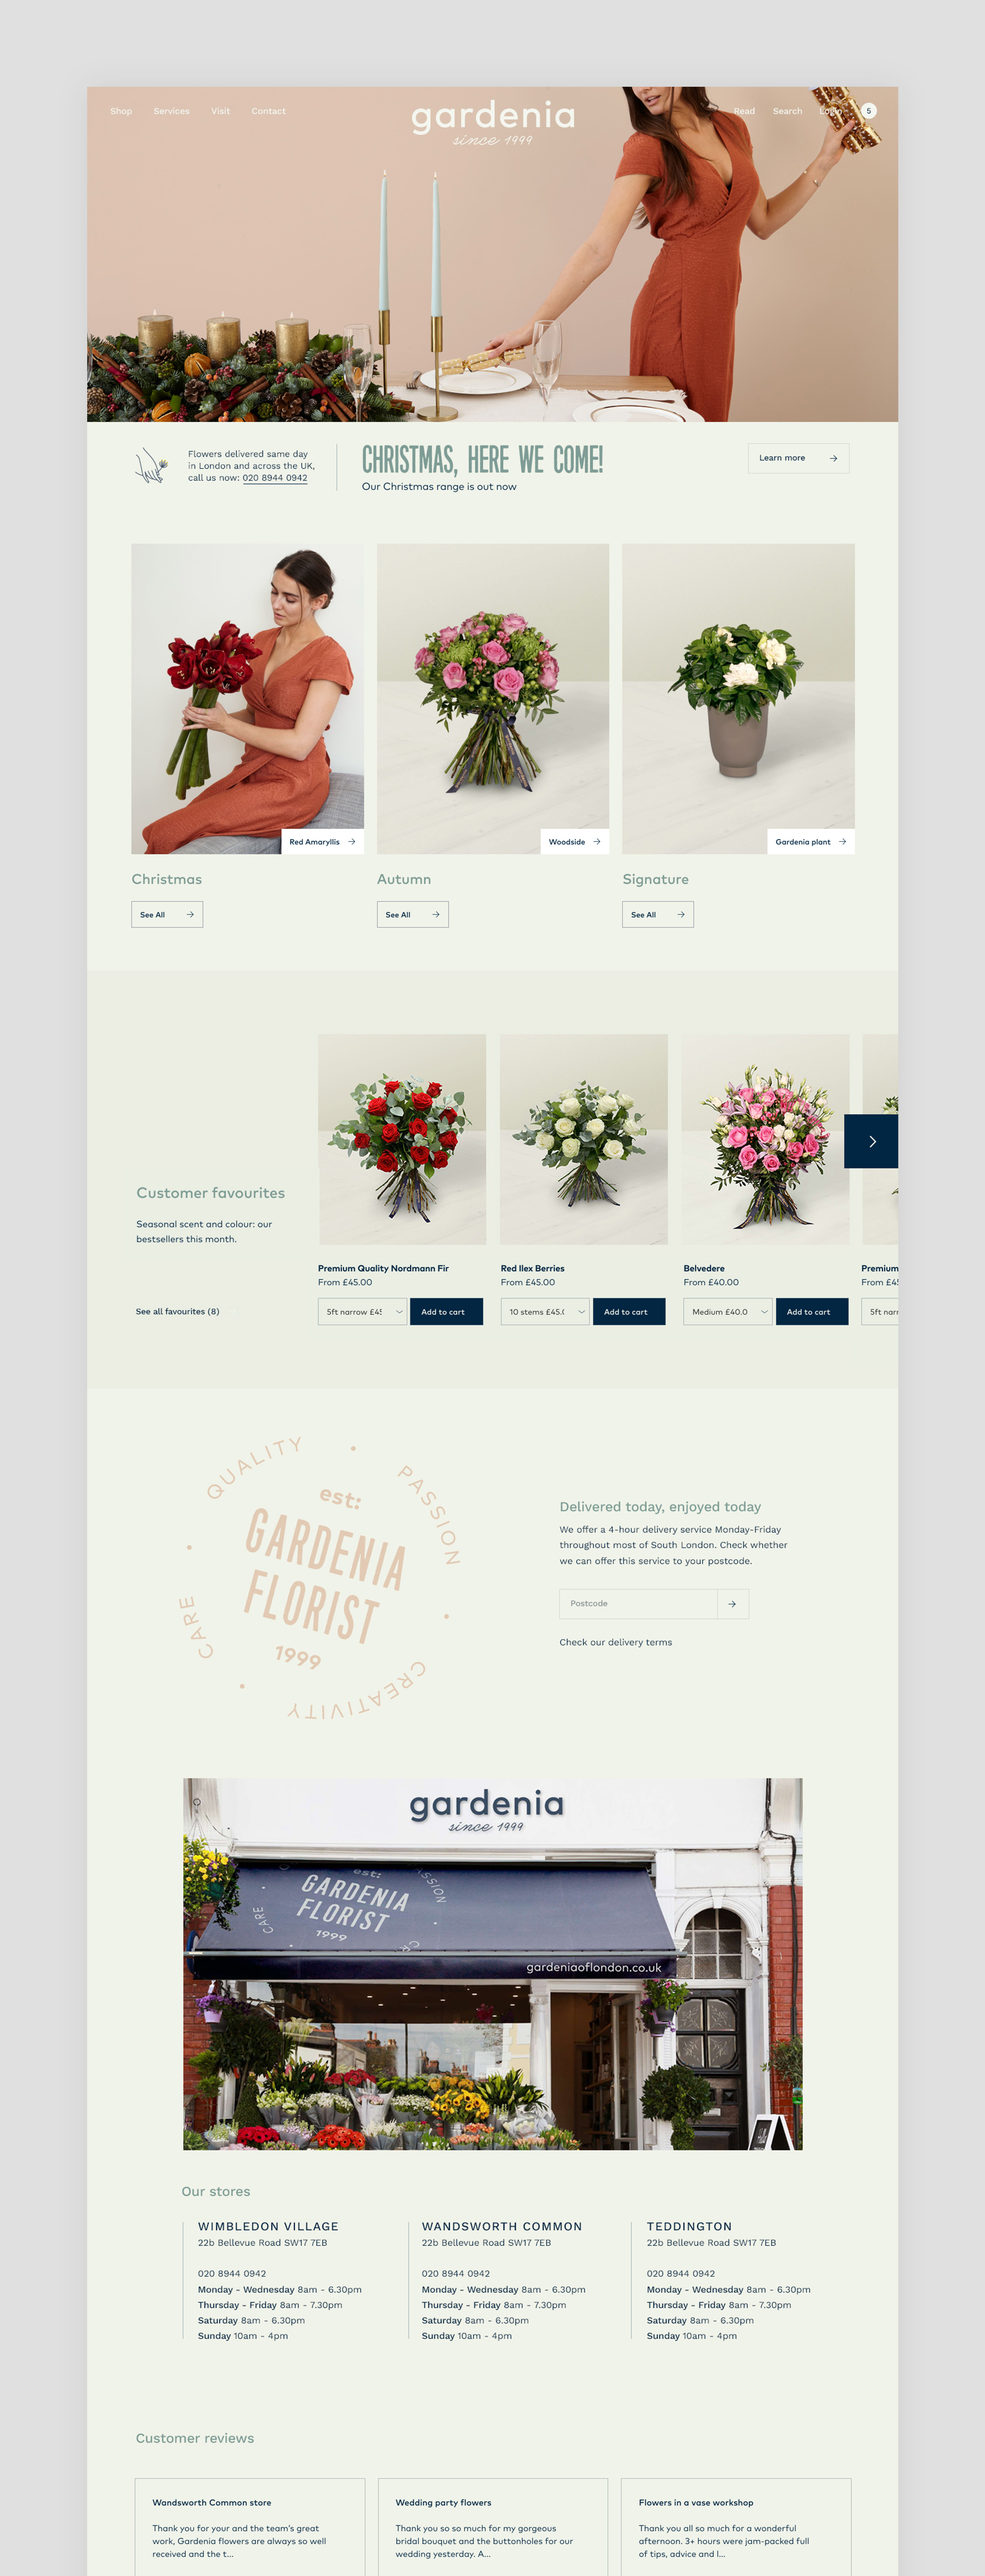 Gardenia_website_1_high